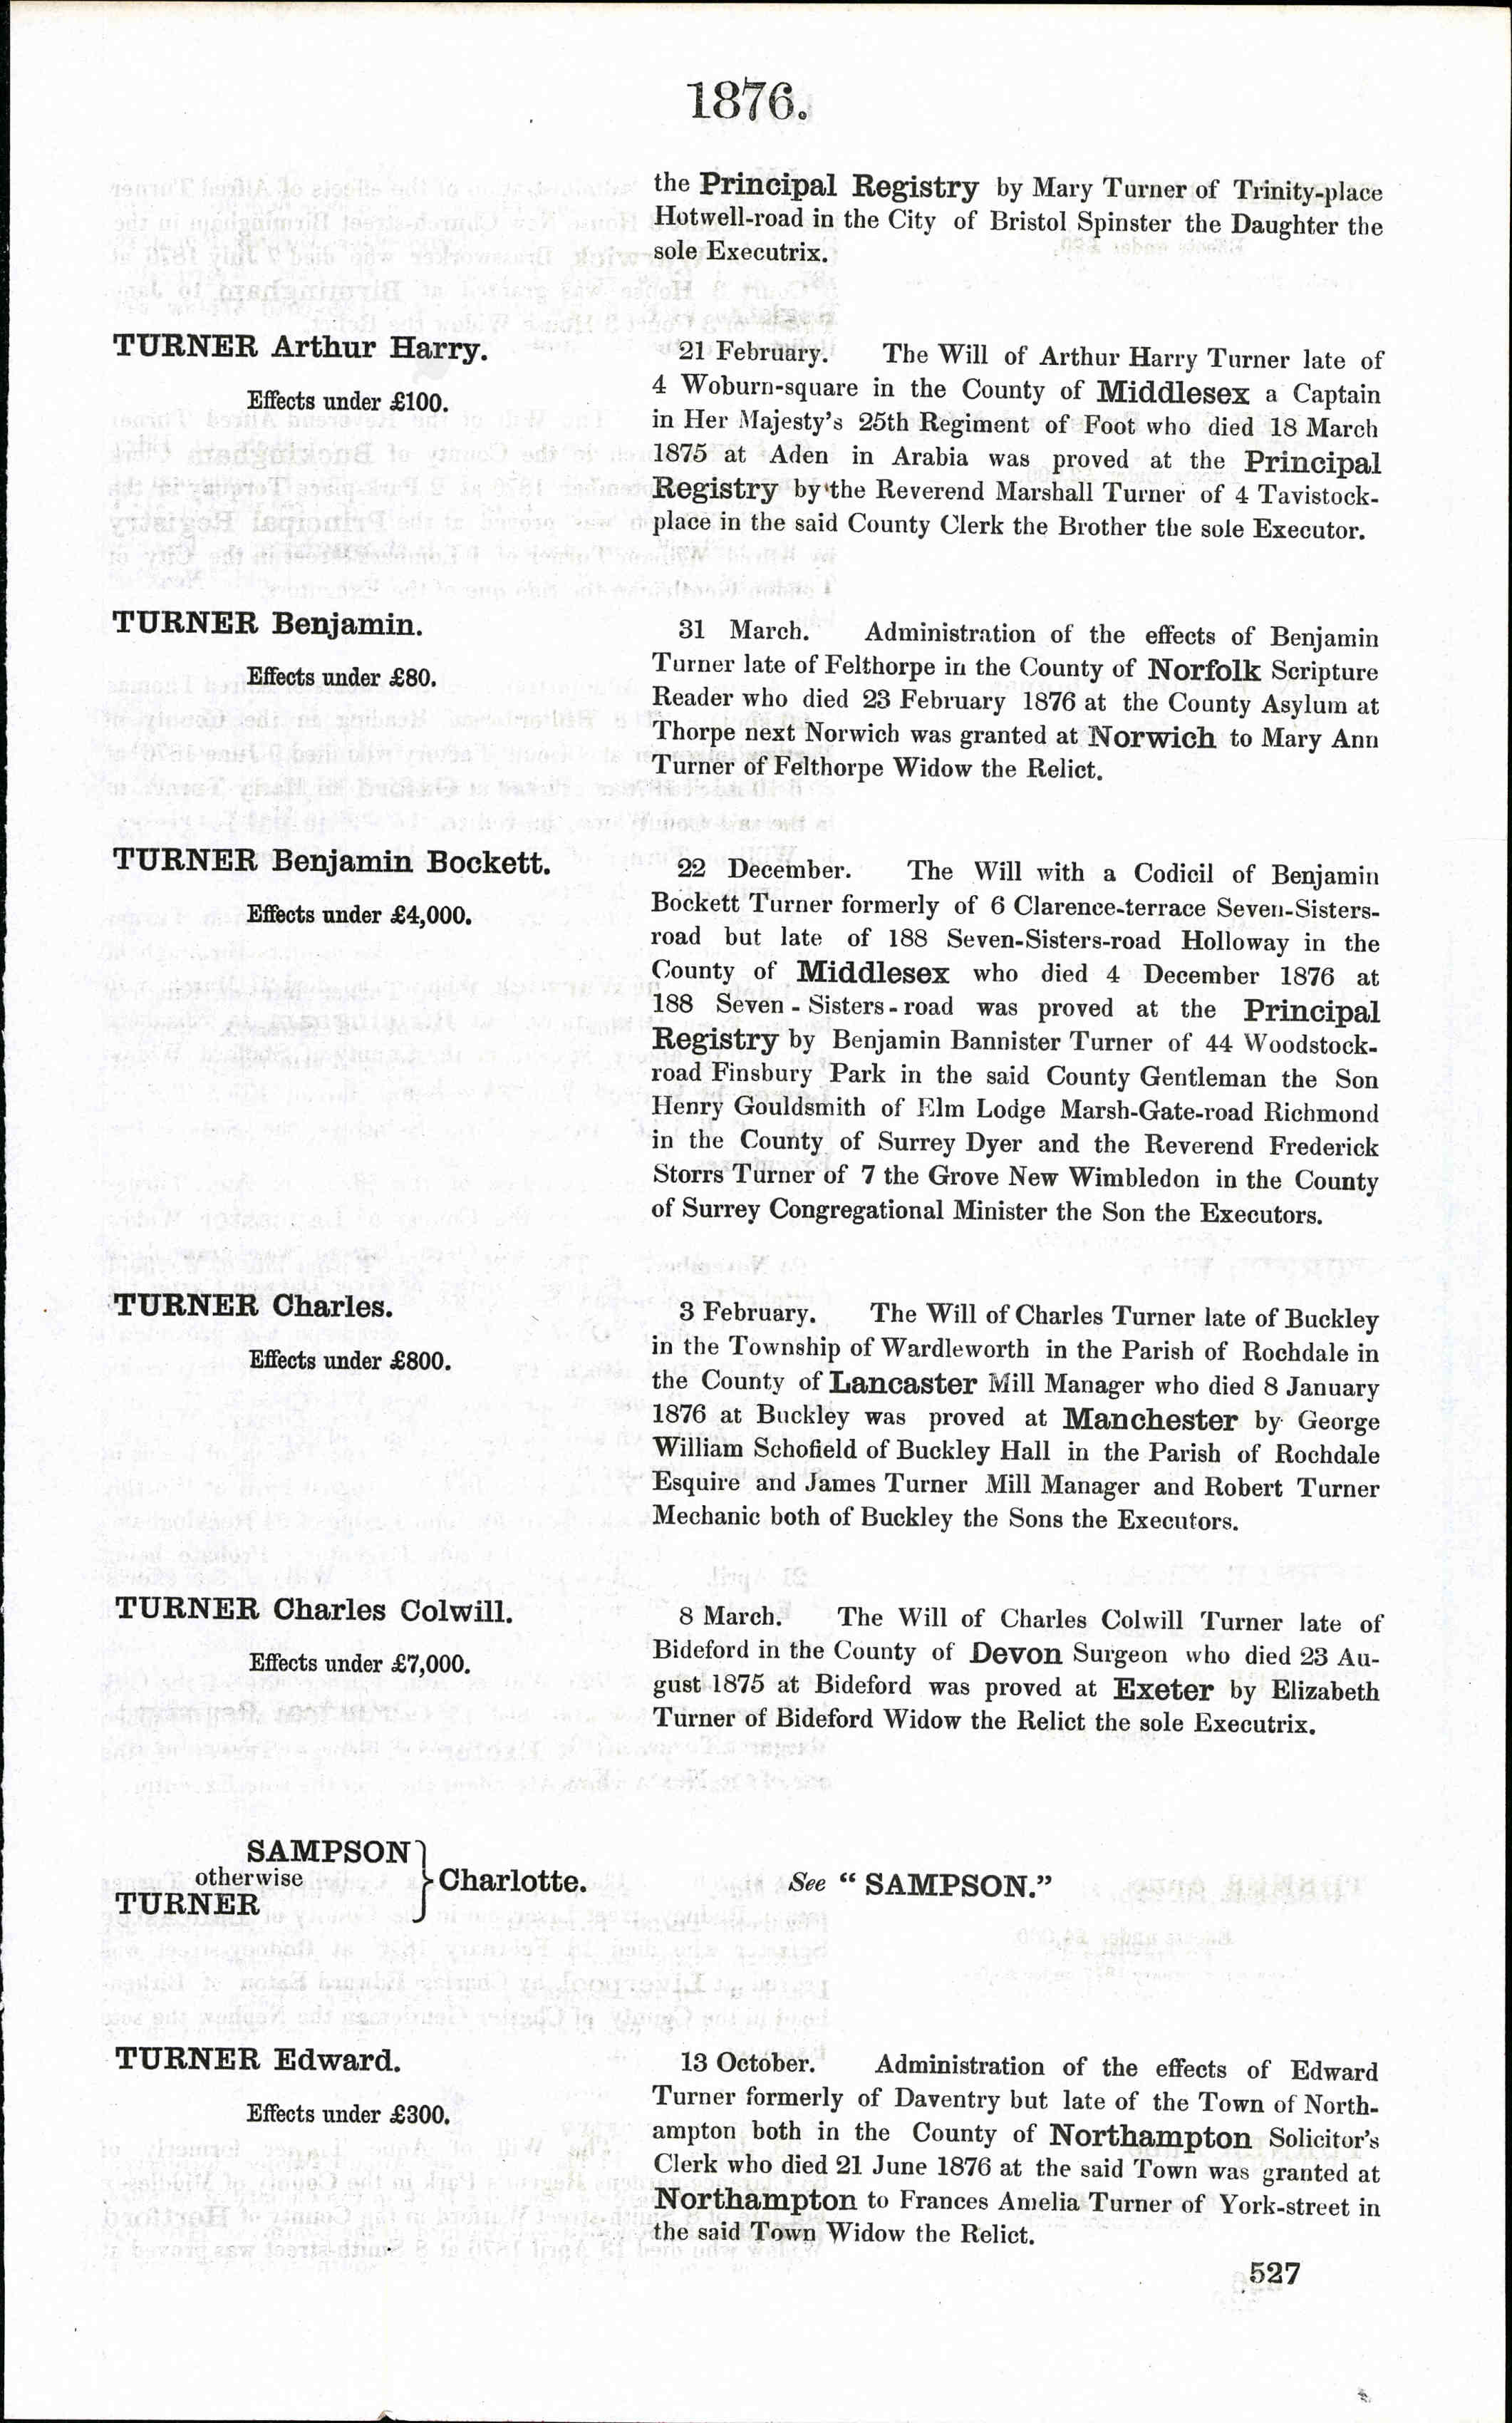 Probate record for Benjamin Bockett Turner who died 4 Dec 1876.